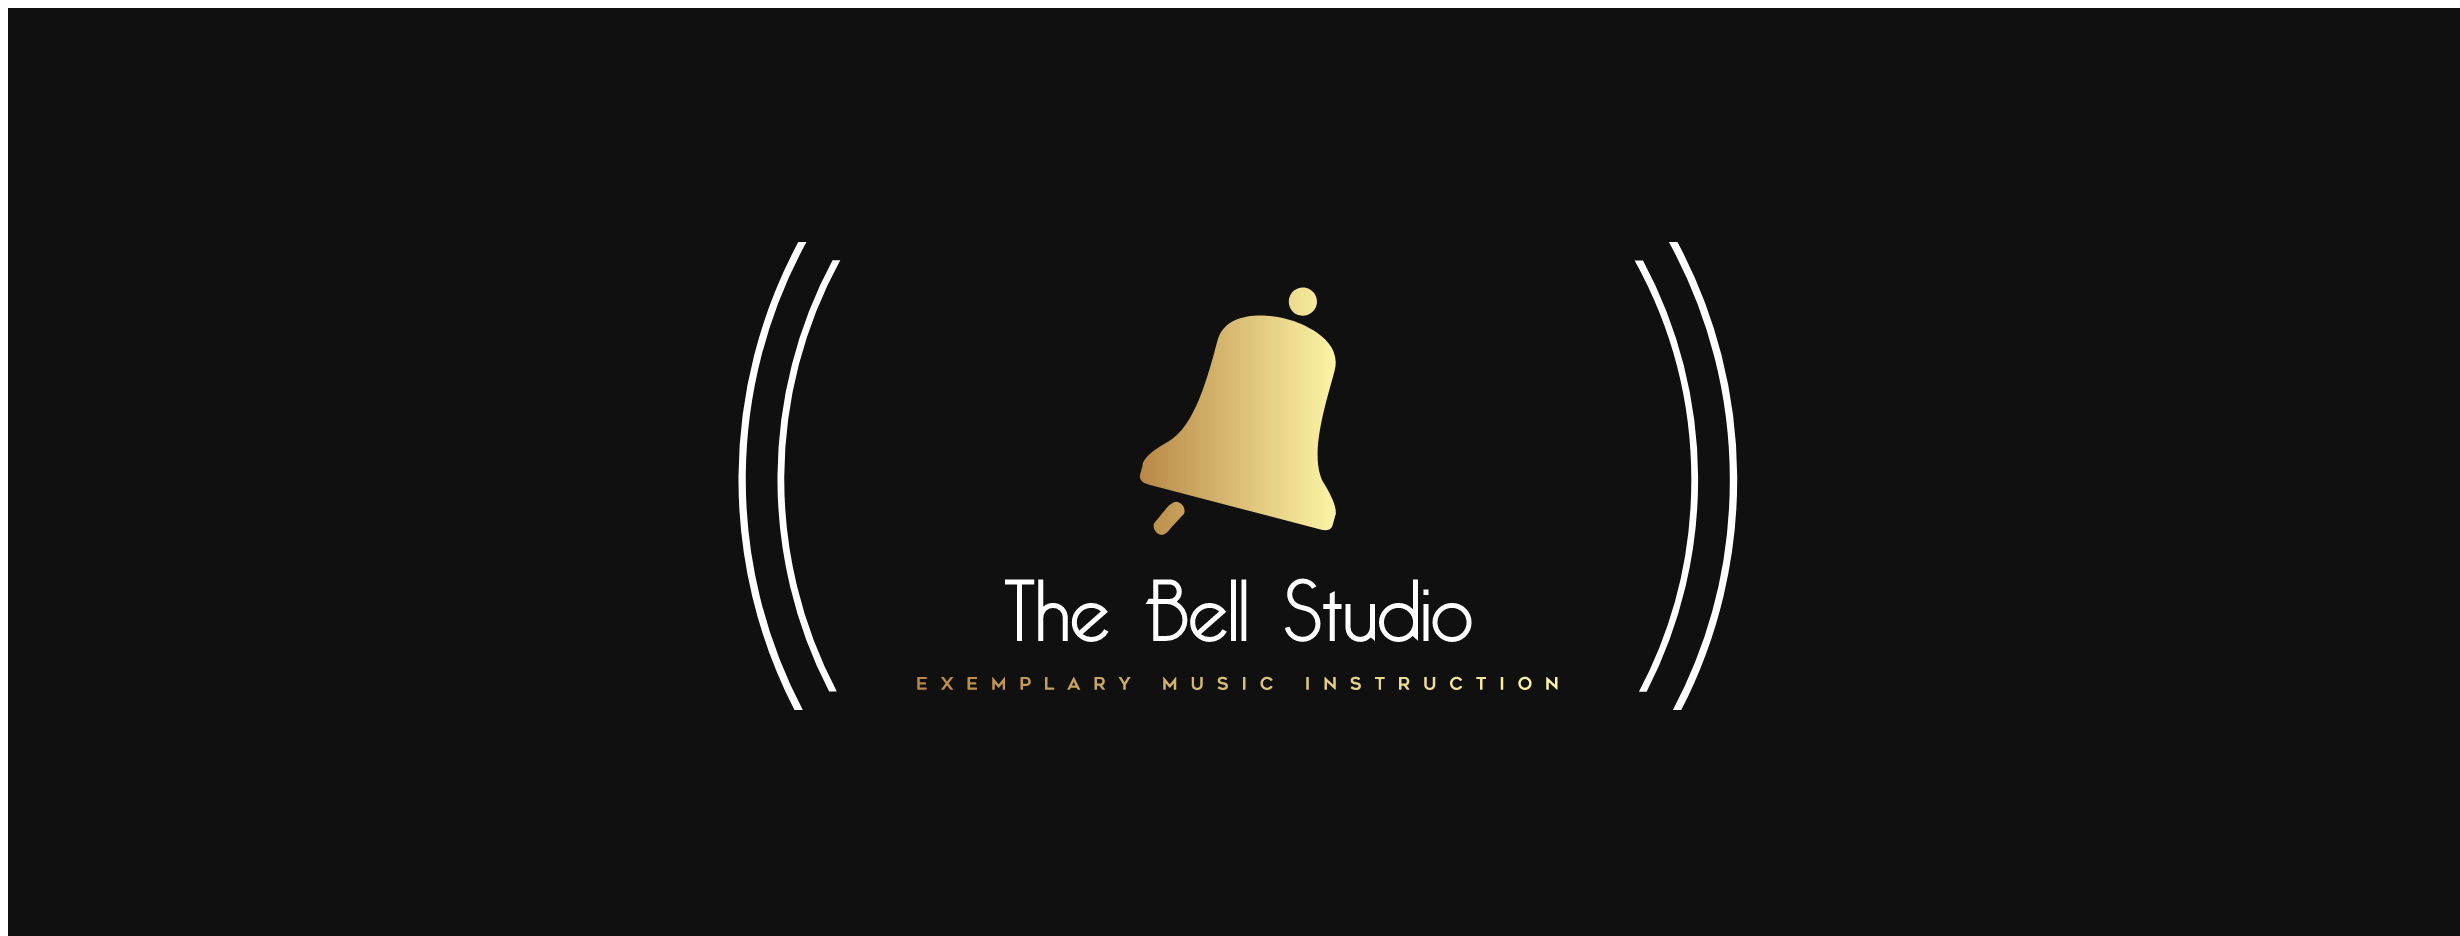 The Bell Studio